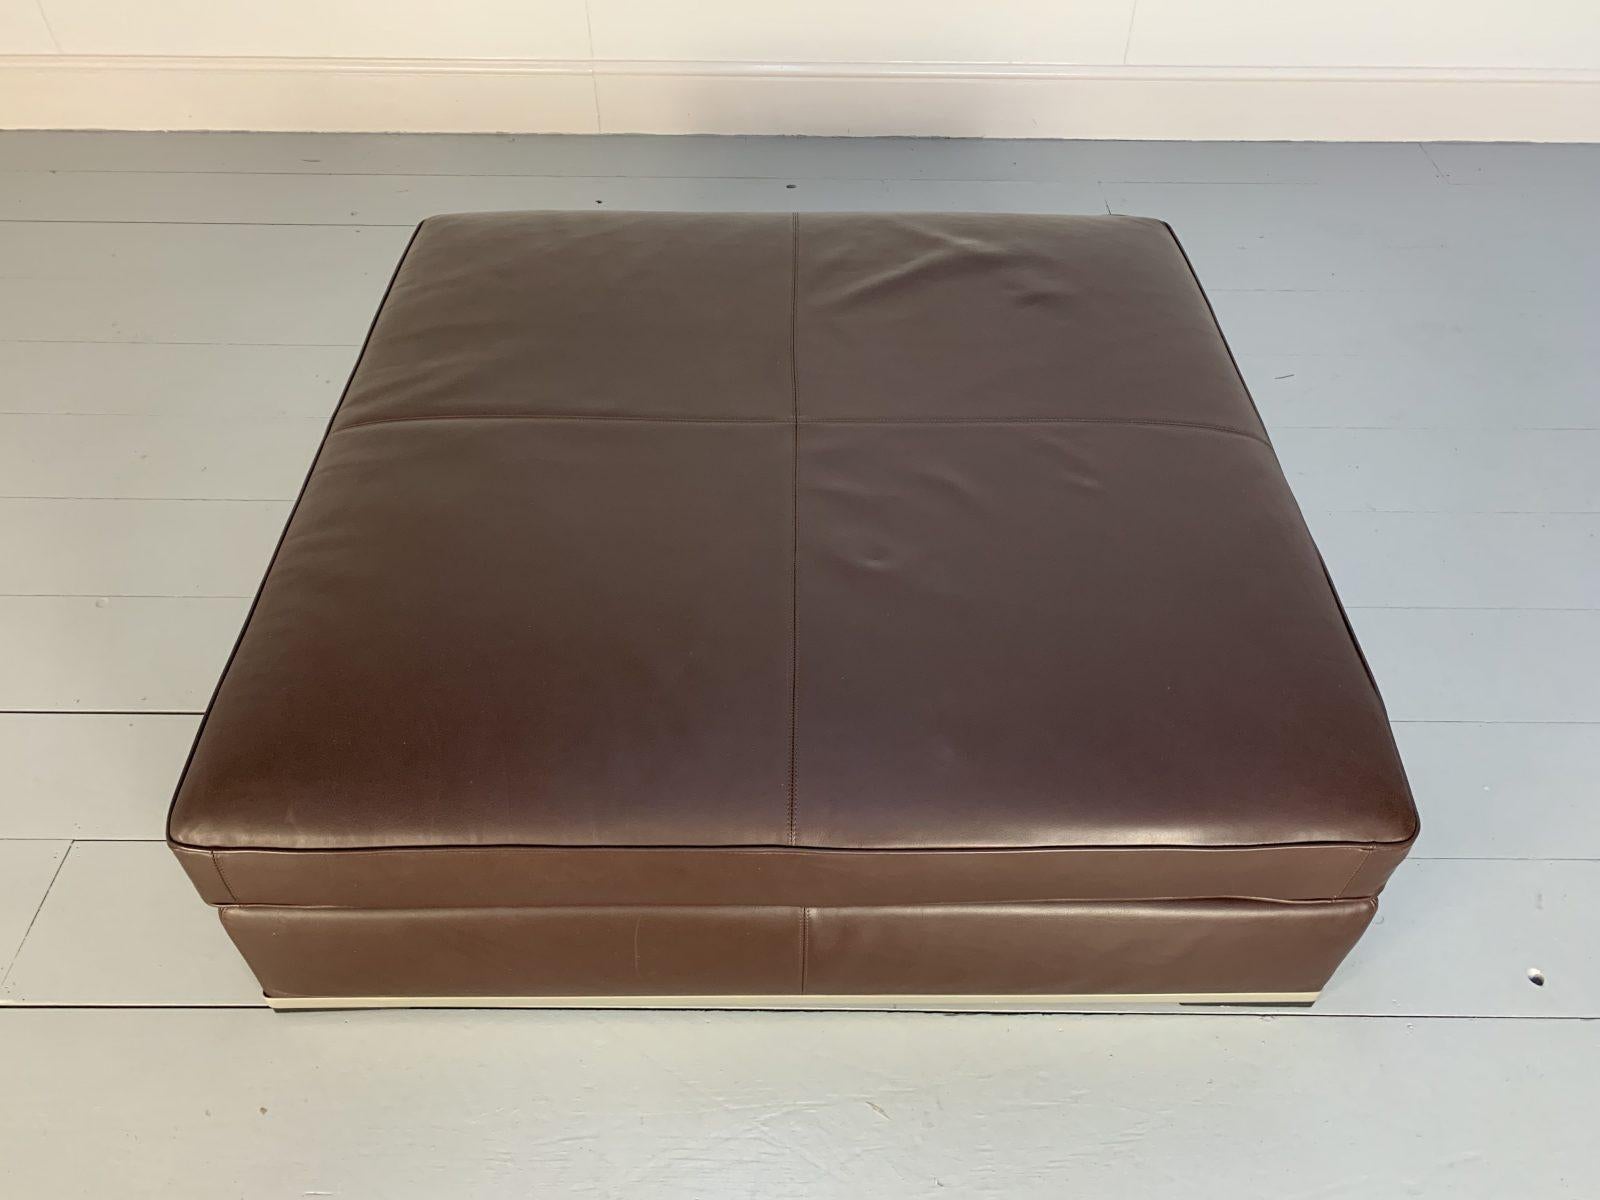 B&B Italia “Maxalto Apta” Footstool Sofa Table in Dark Brown “Gamma” Leather In Good Condition For Sale In Barrowford, GB